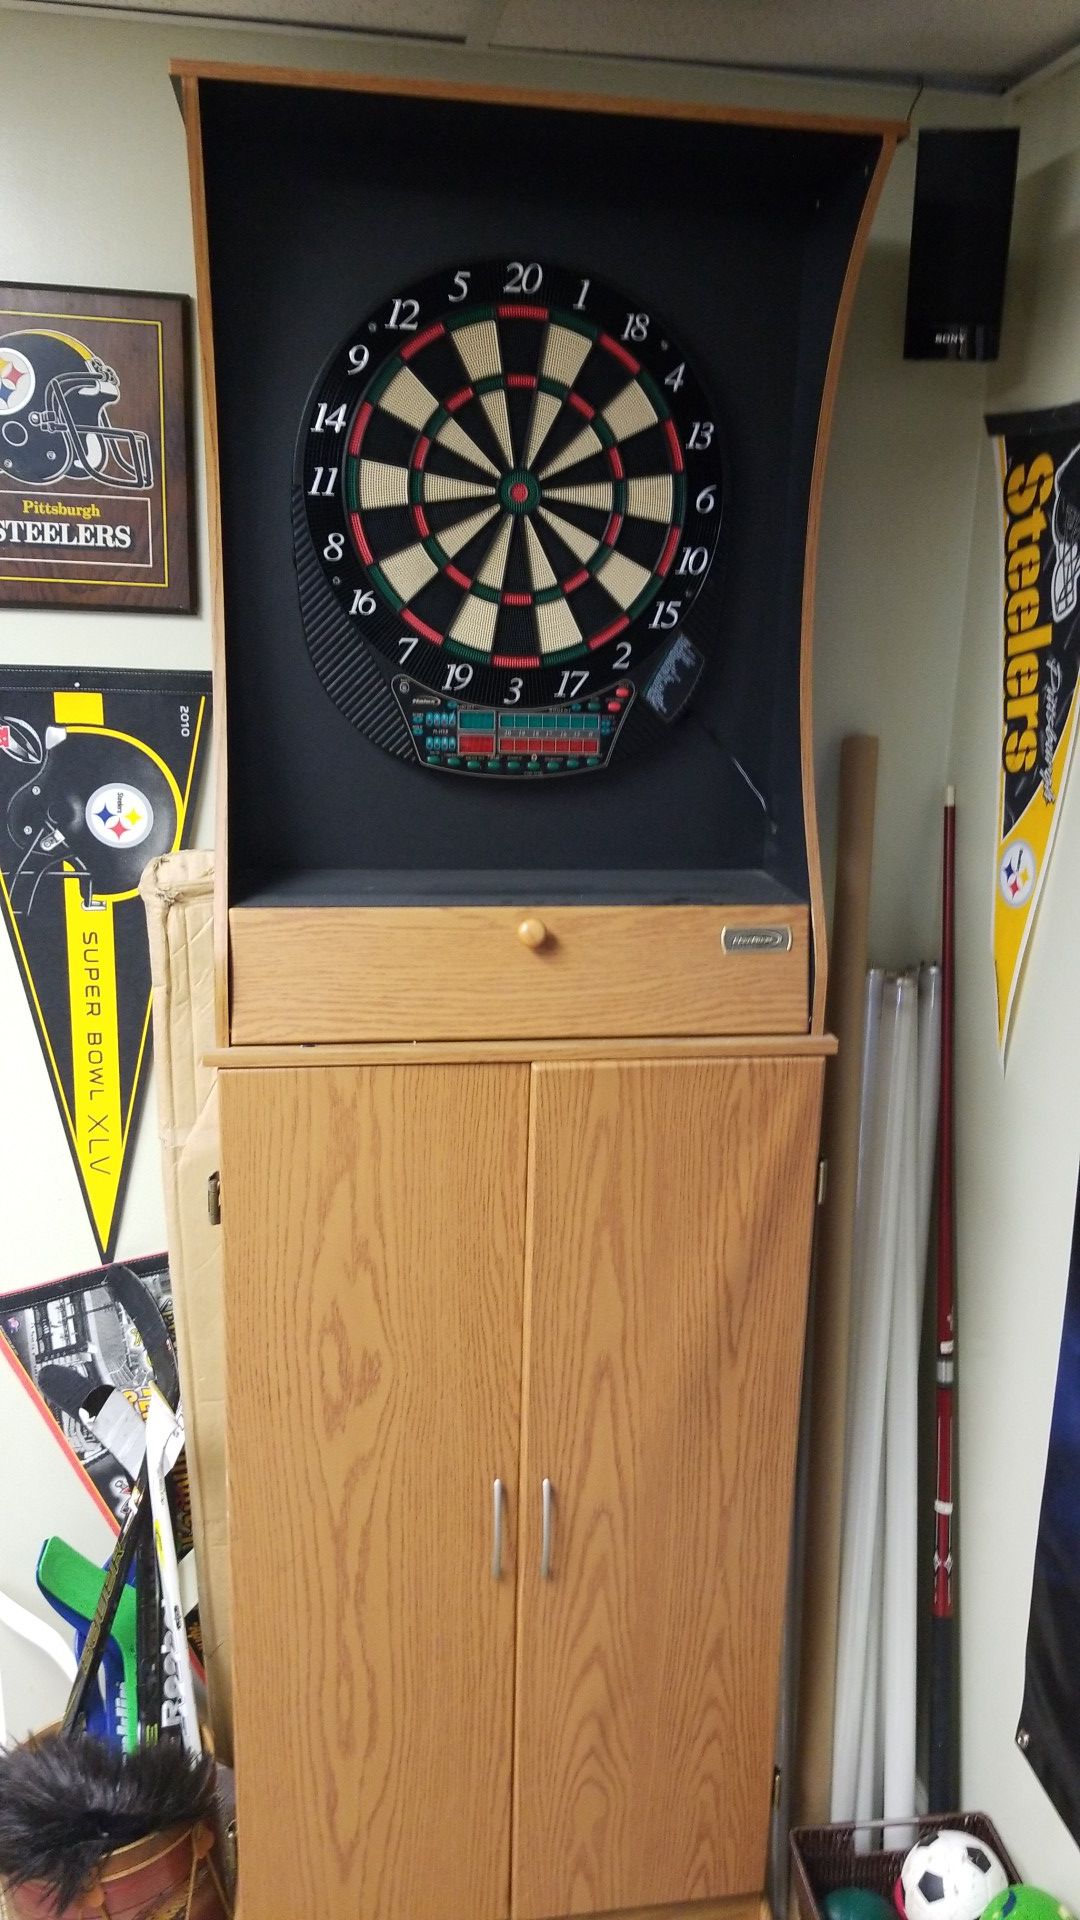 Halex electronic dart board